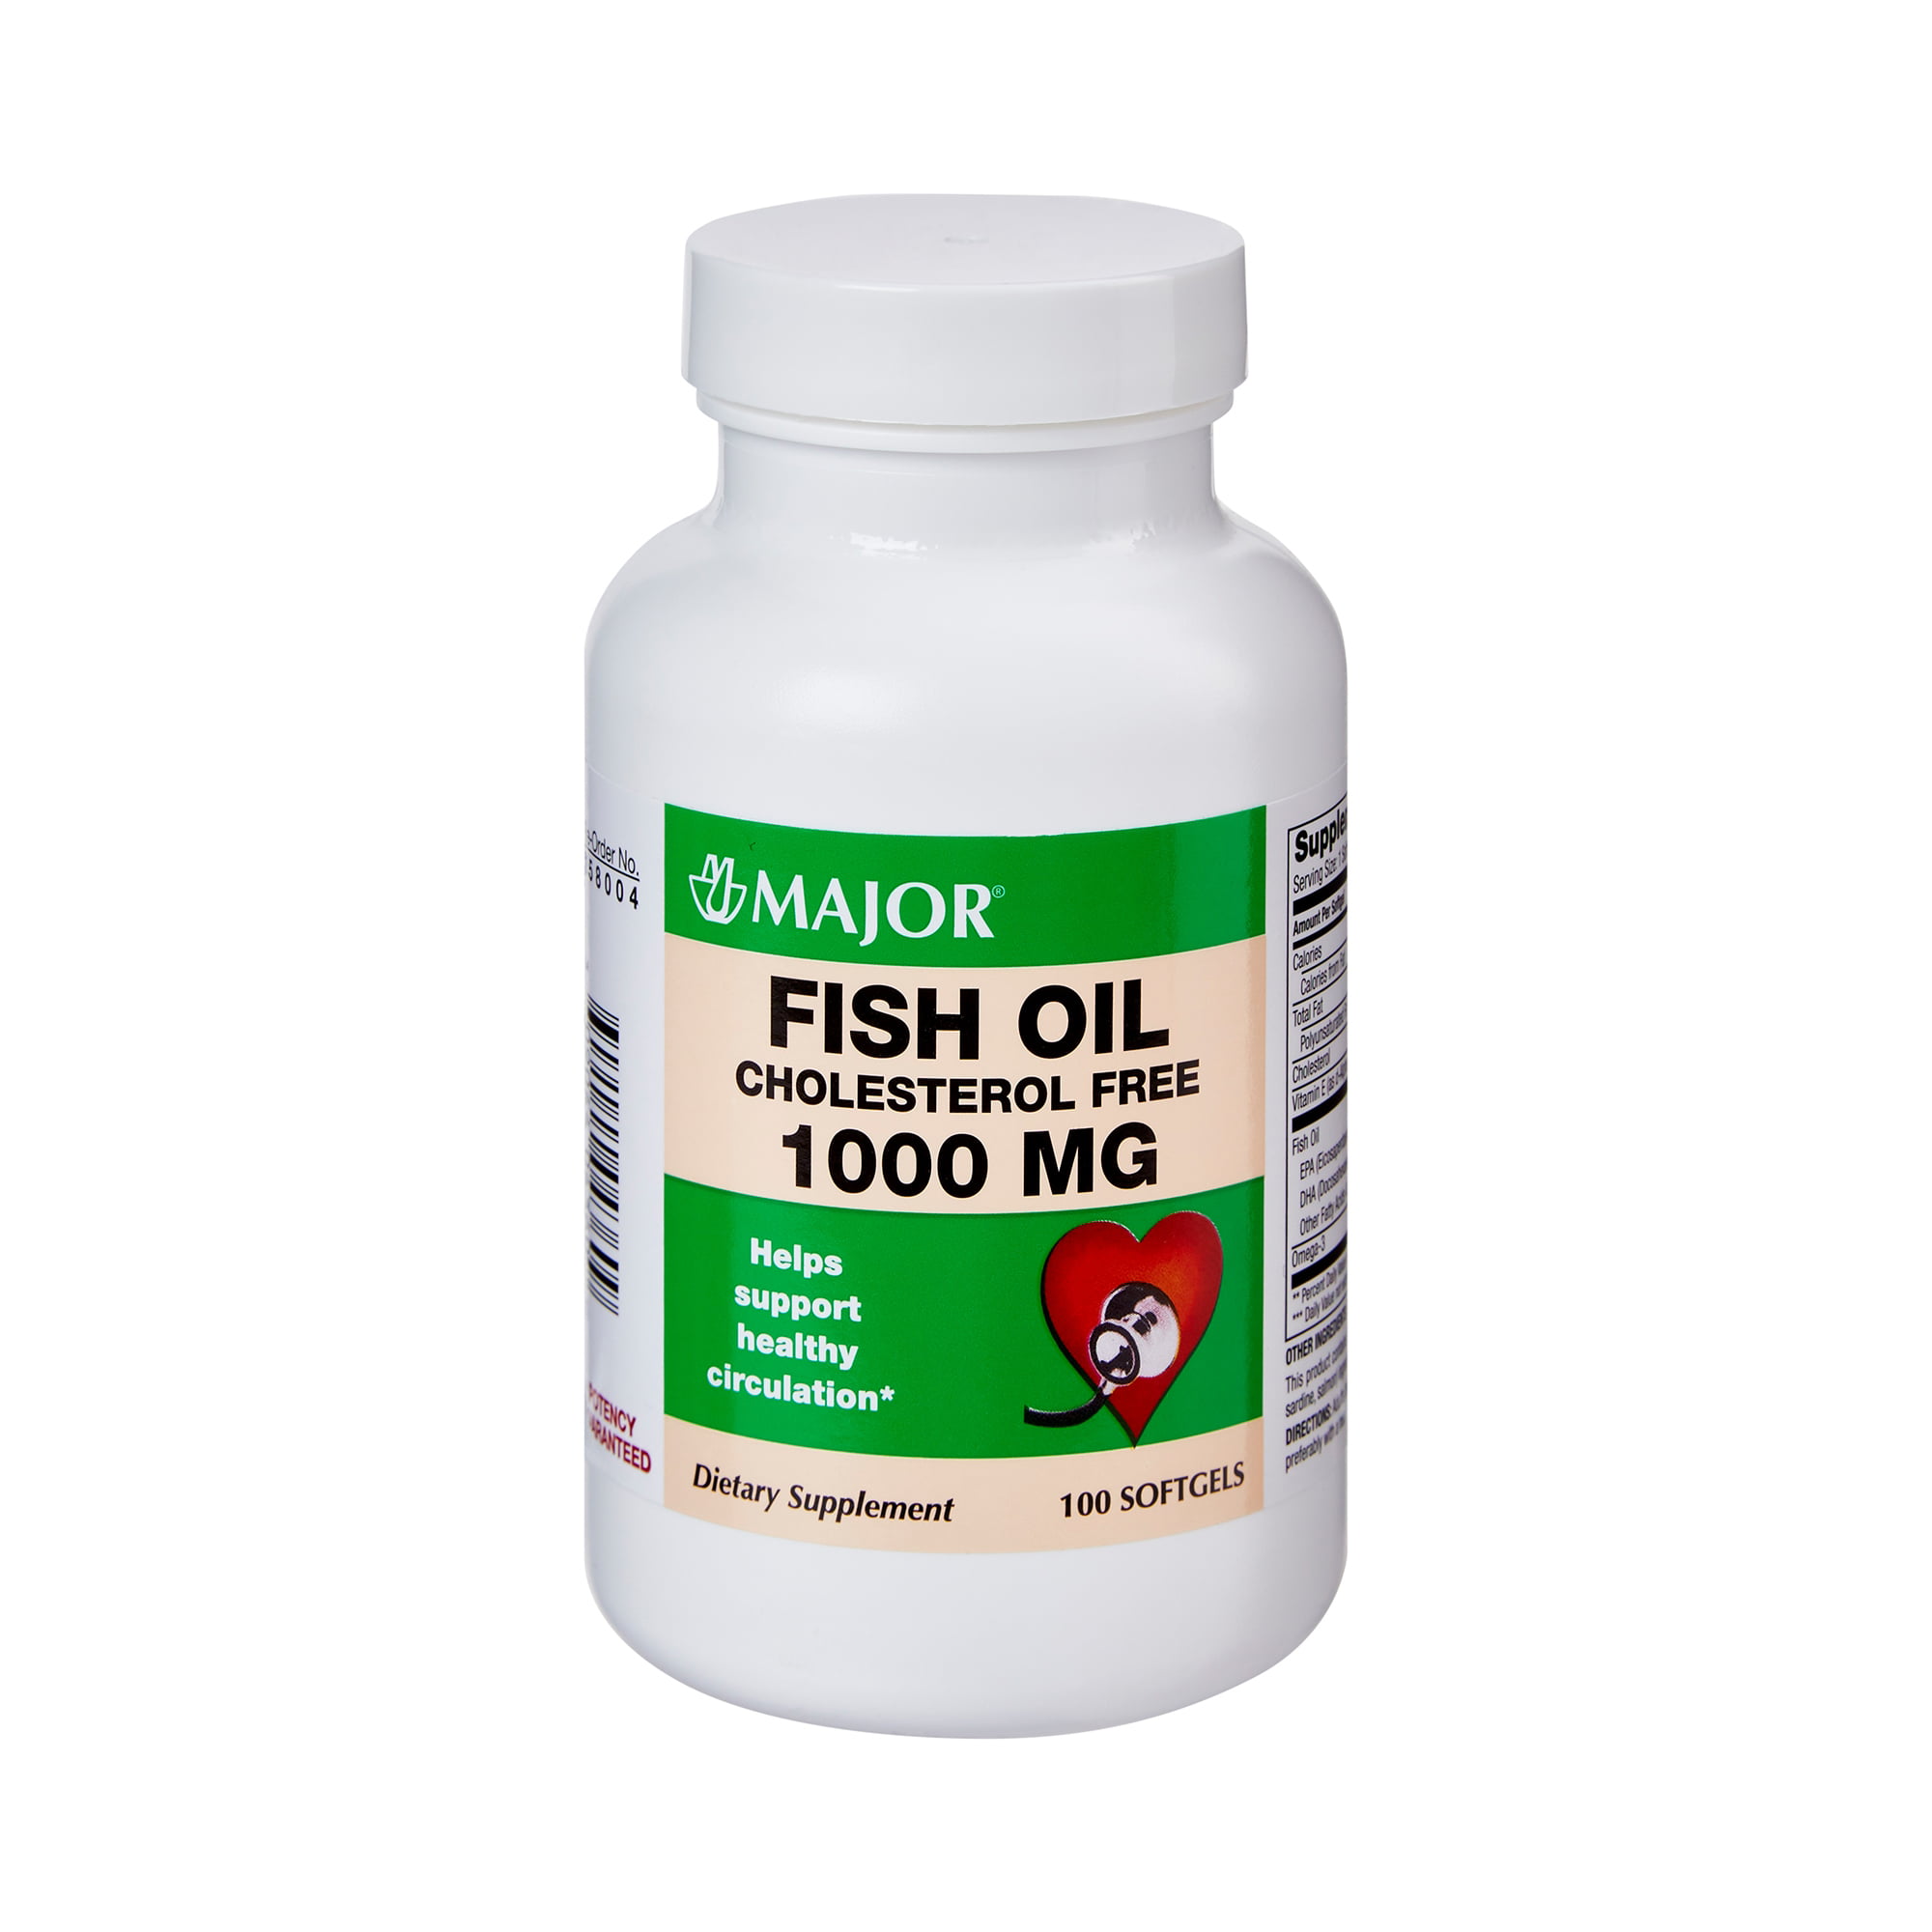 Омега 3 и холестерин. Норвежн Фиш оил. Fish Oil Vessel Production. Повышает ли омега 3 холестерин